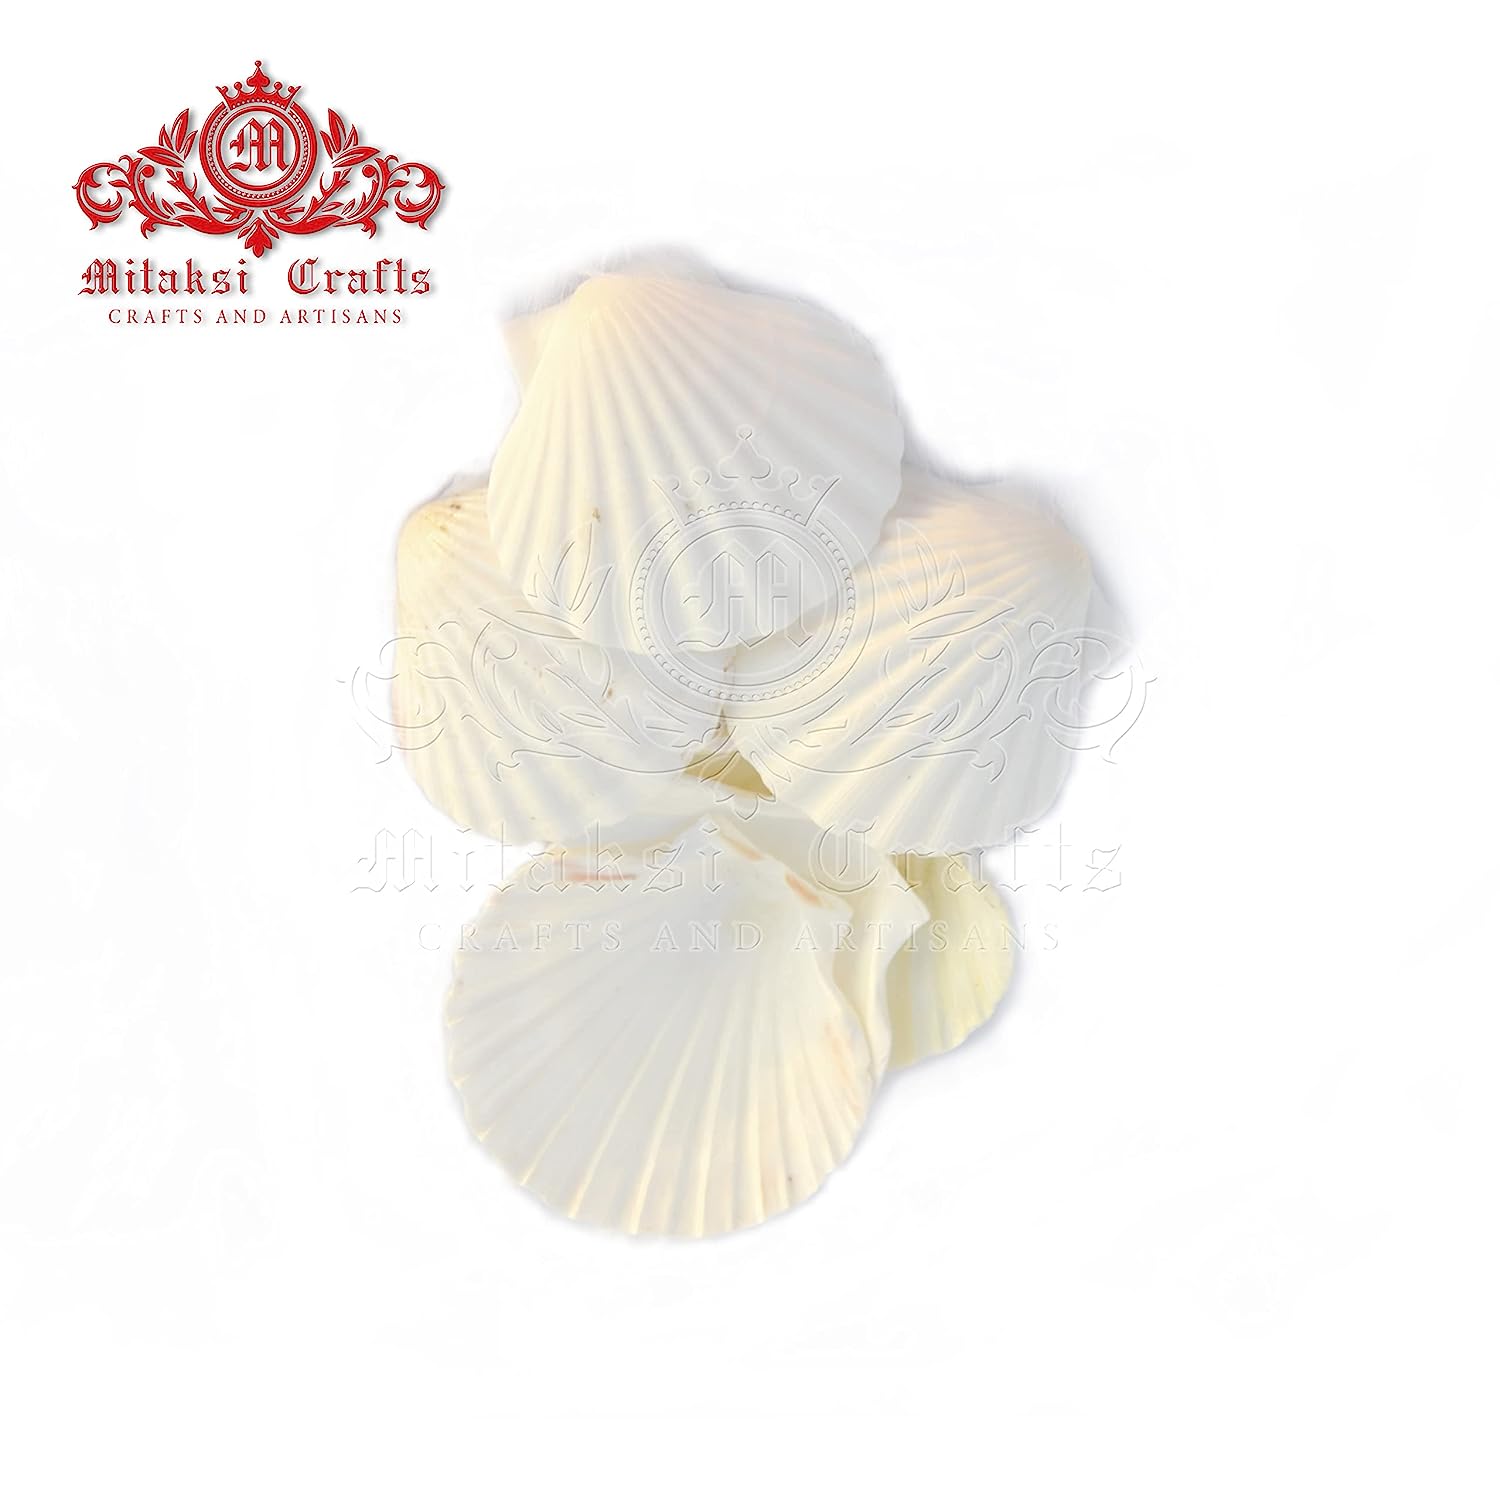 Mitaksi Crafts Large Natural Baking Shells White Scallops, 4 - Inches, White Colour - 6 Shells